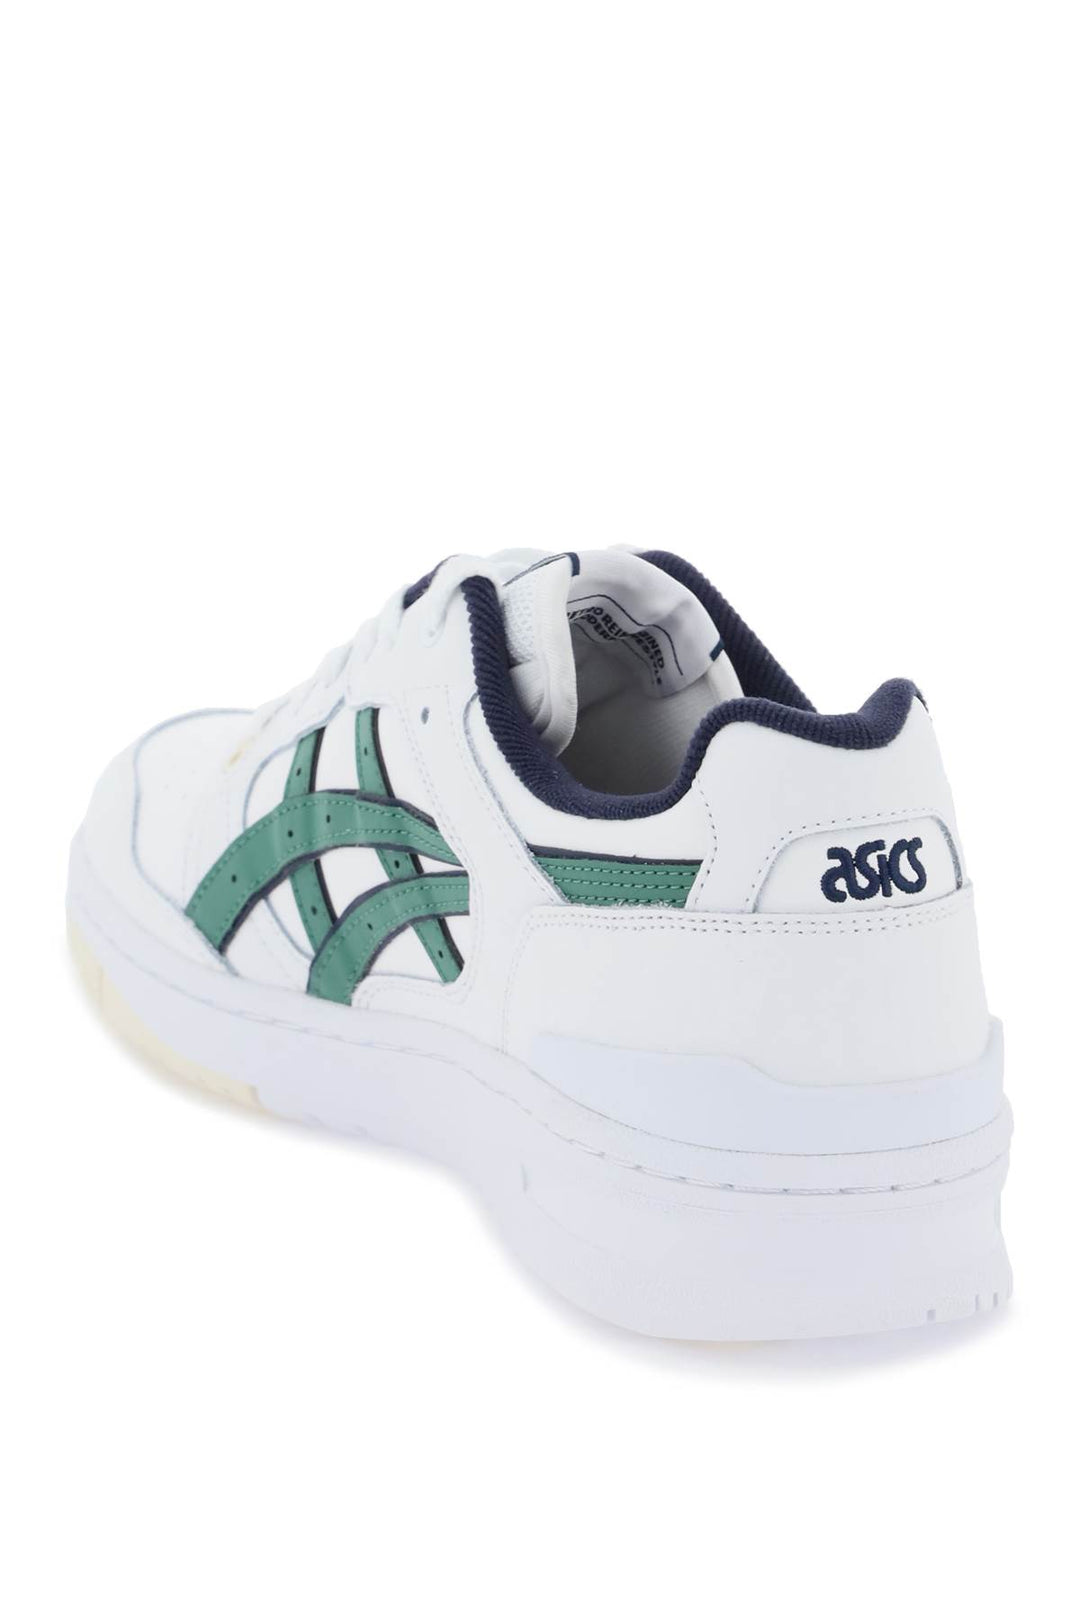 Asics ex89 sneakers-2